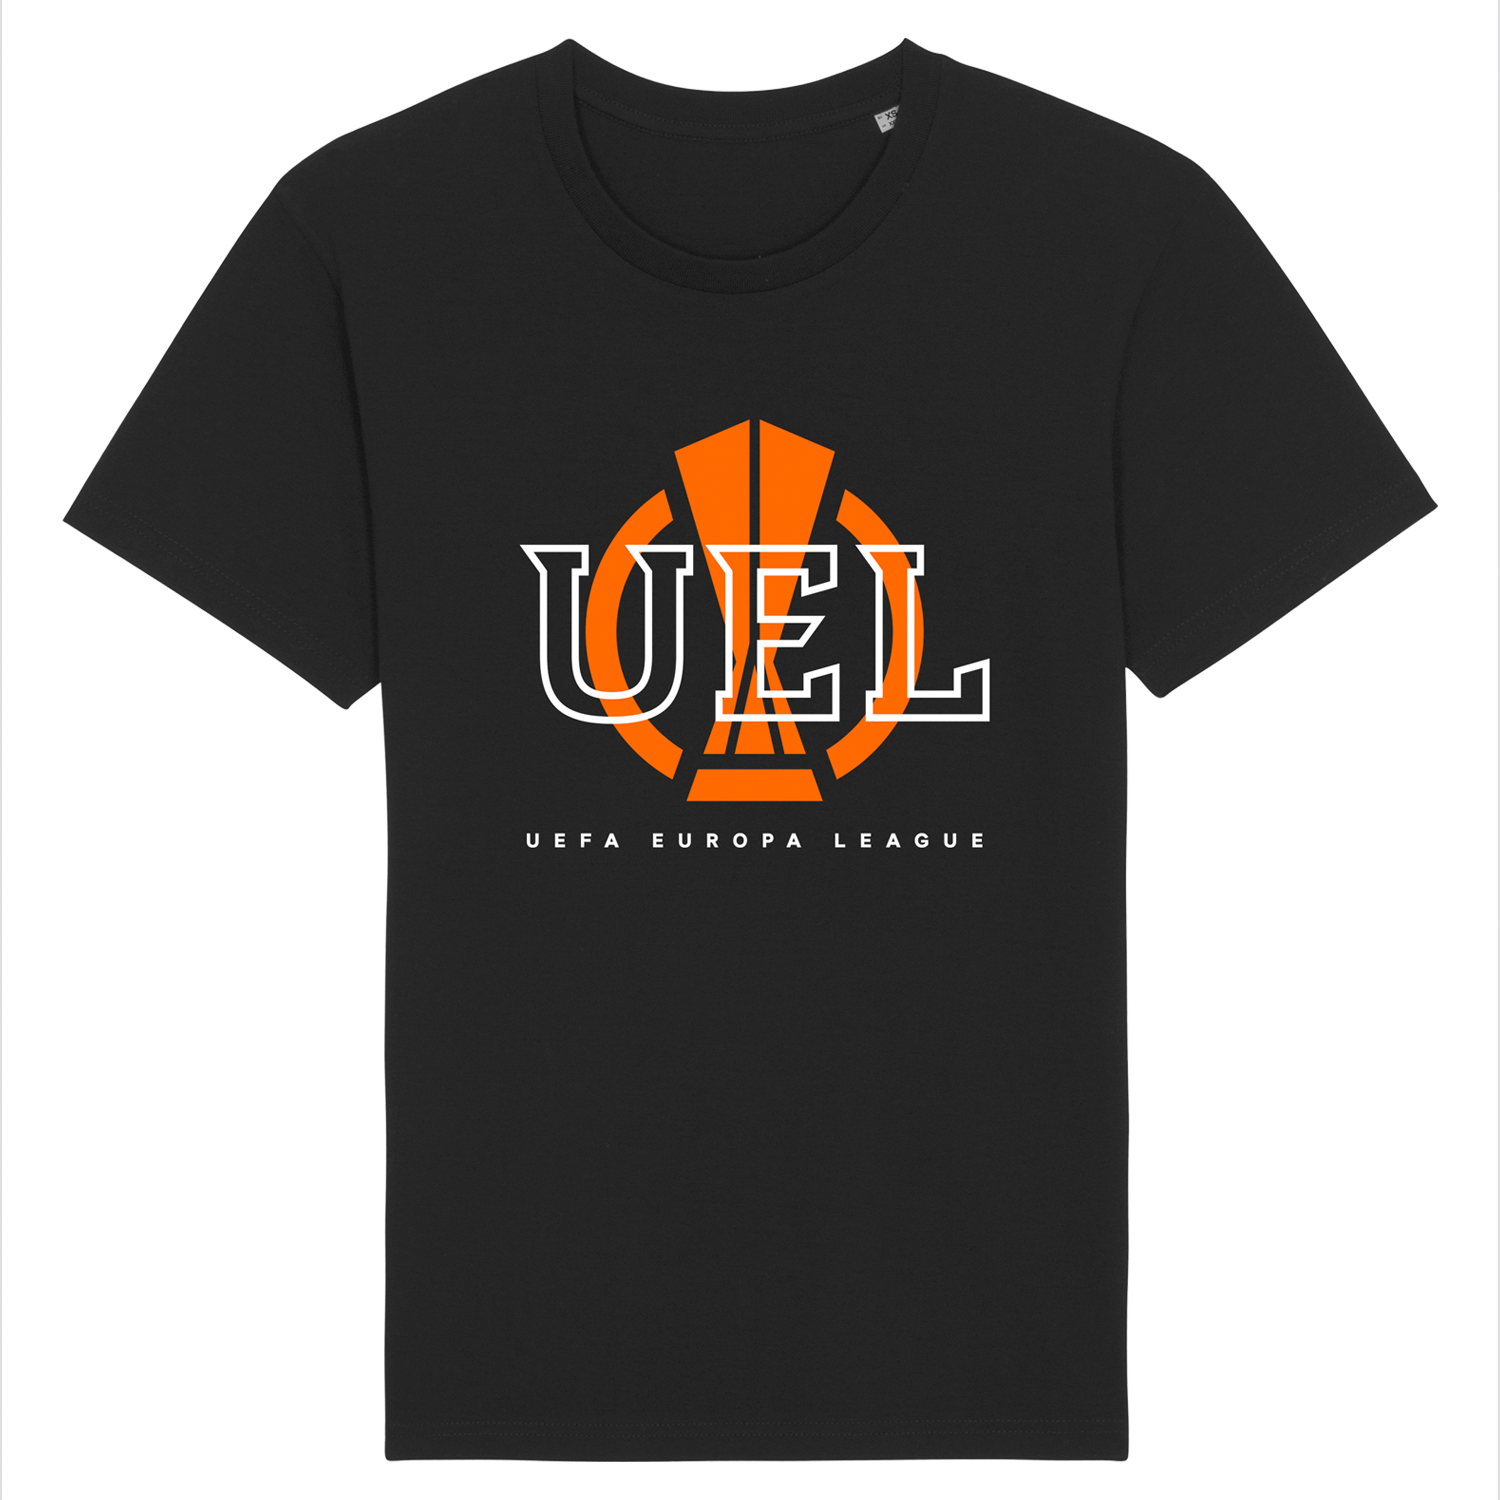 UEFA Europa League - UEL Black T-Shirt UEFA Club Competitions Online Store